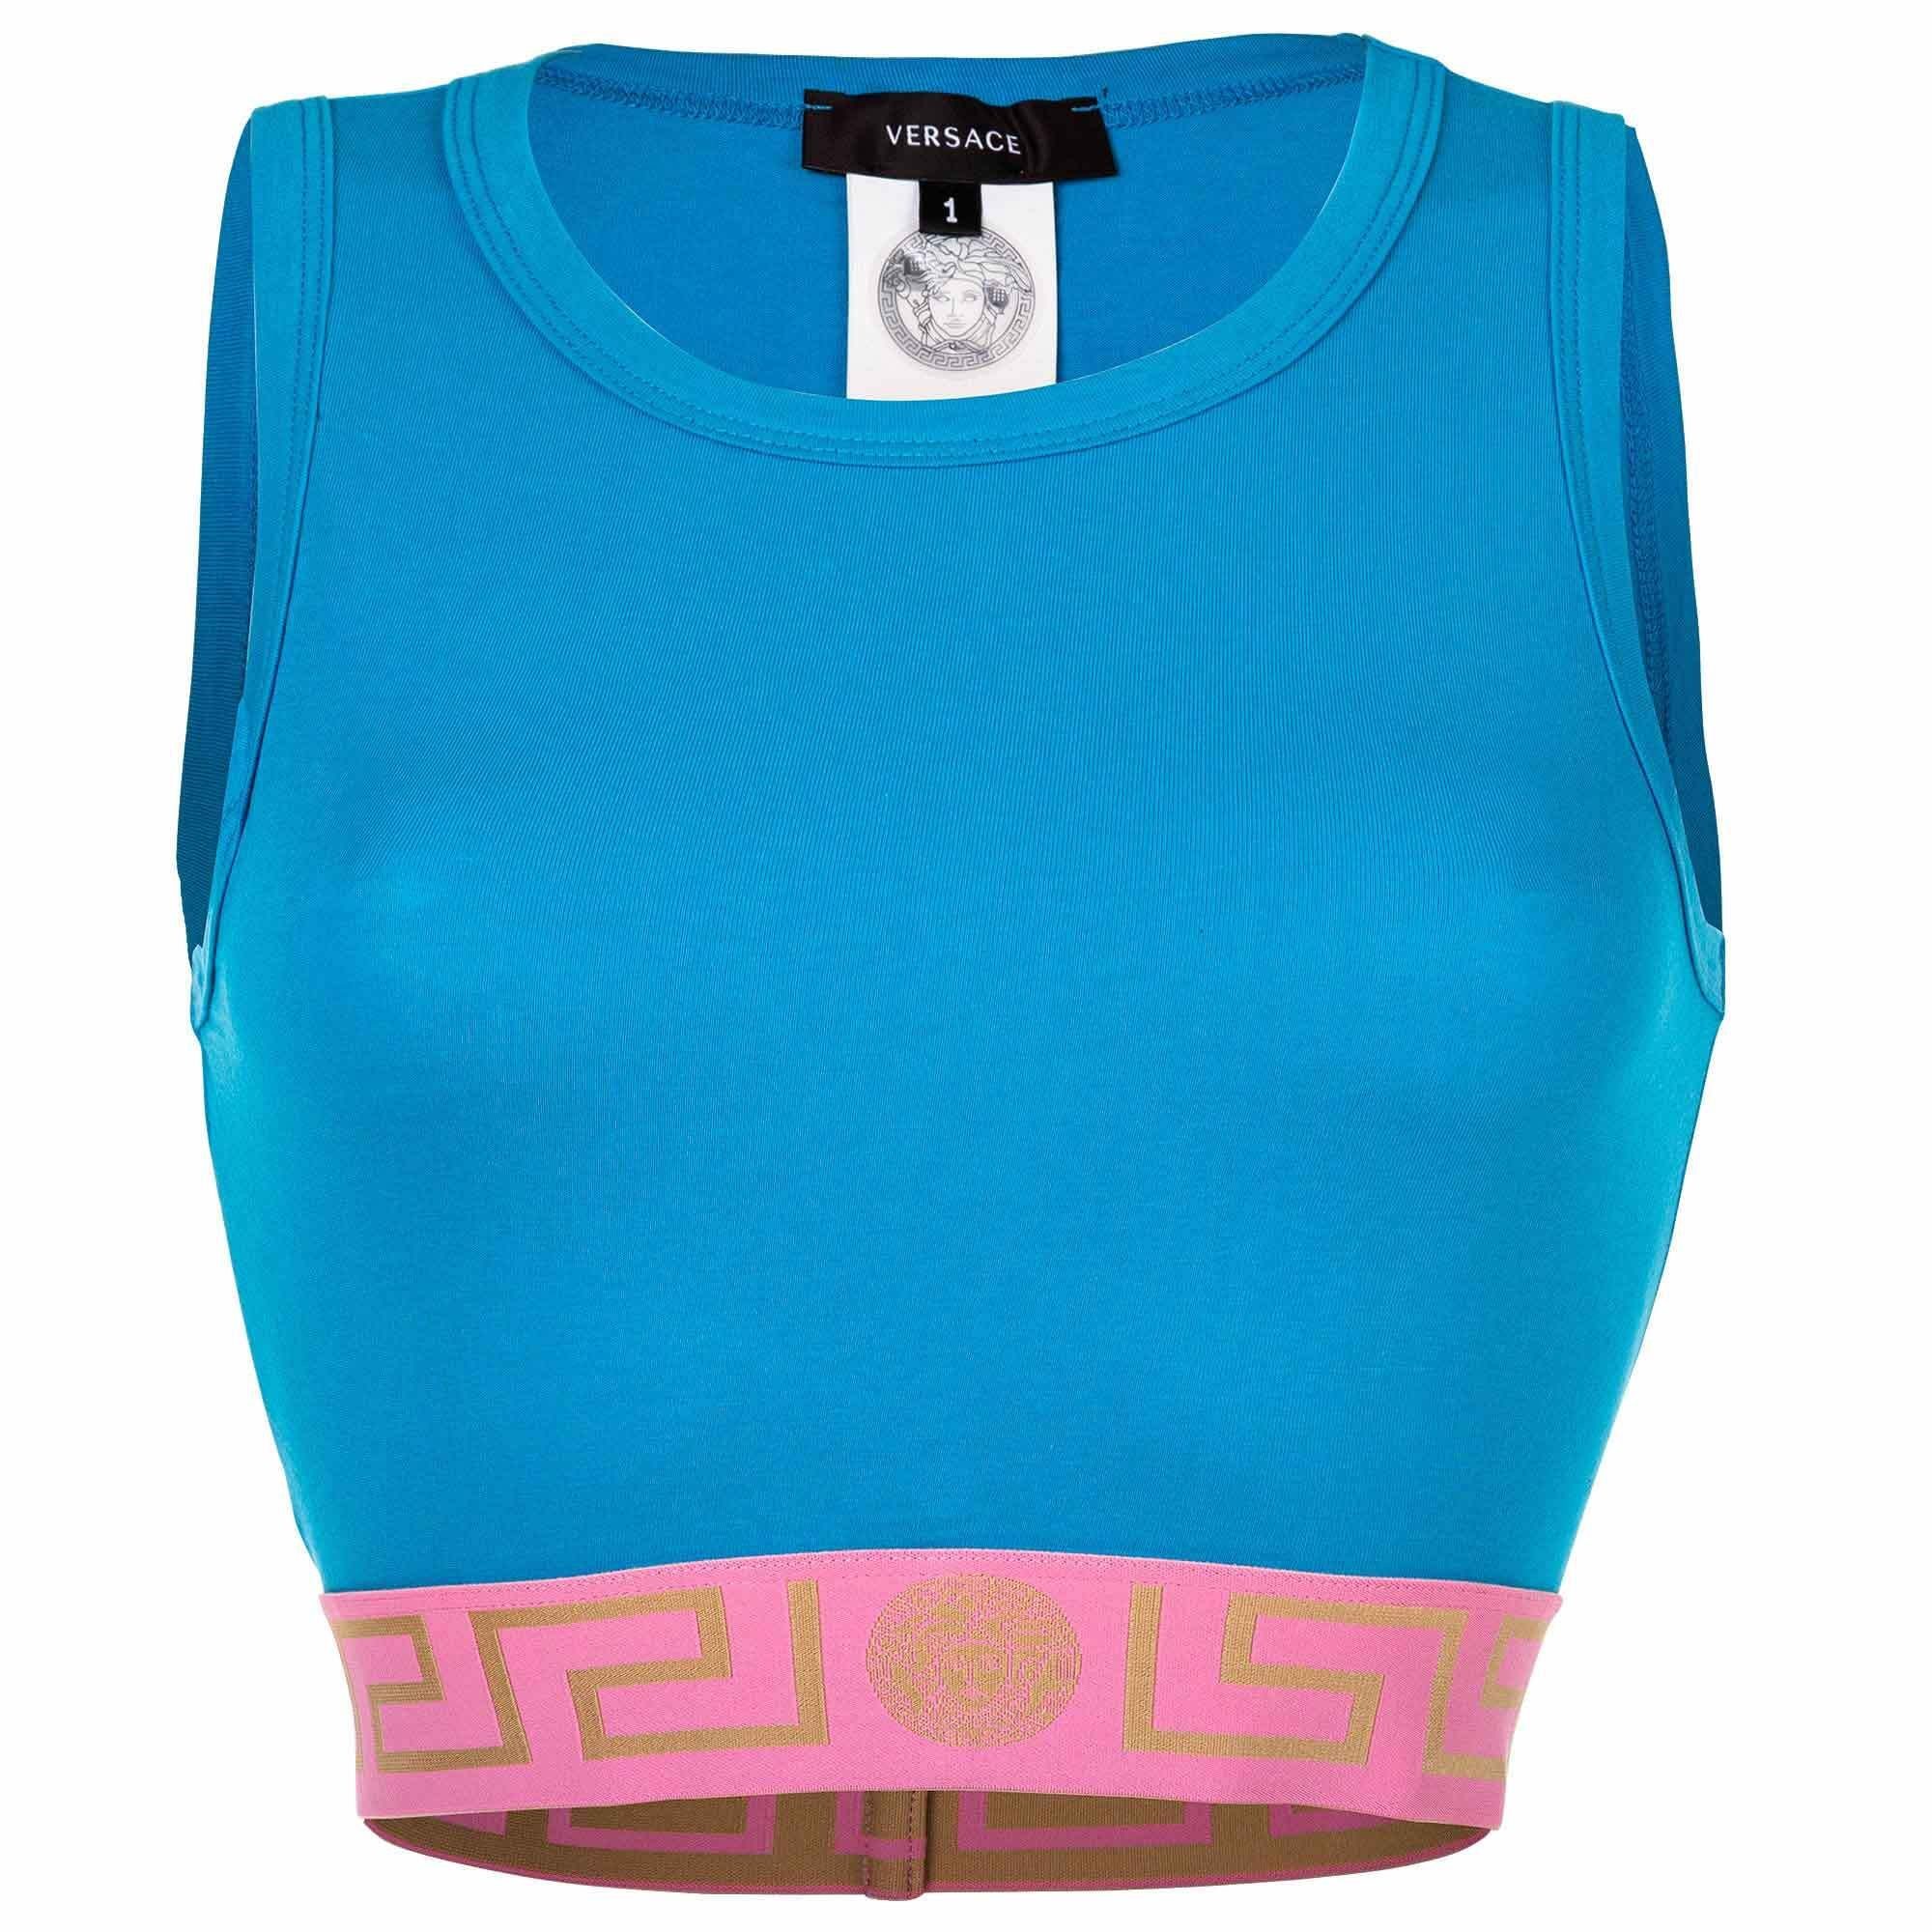 Versace T-Shirt, Bustier - Underwear Bustier Tank Damen TOPEKA, Blau/Rosa